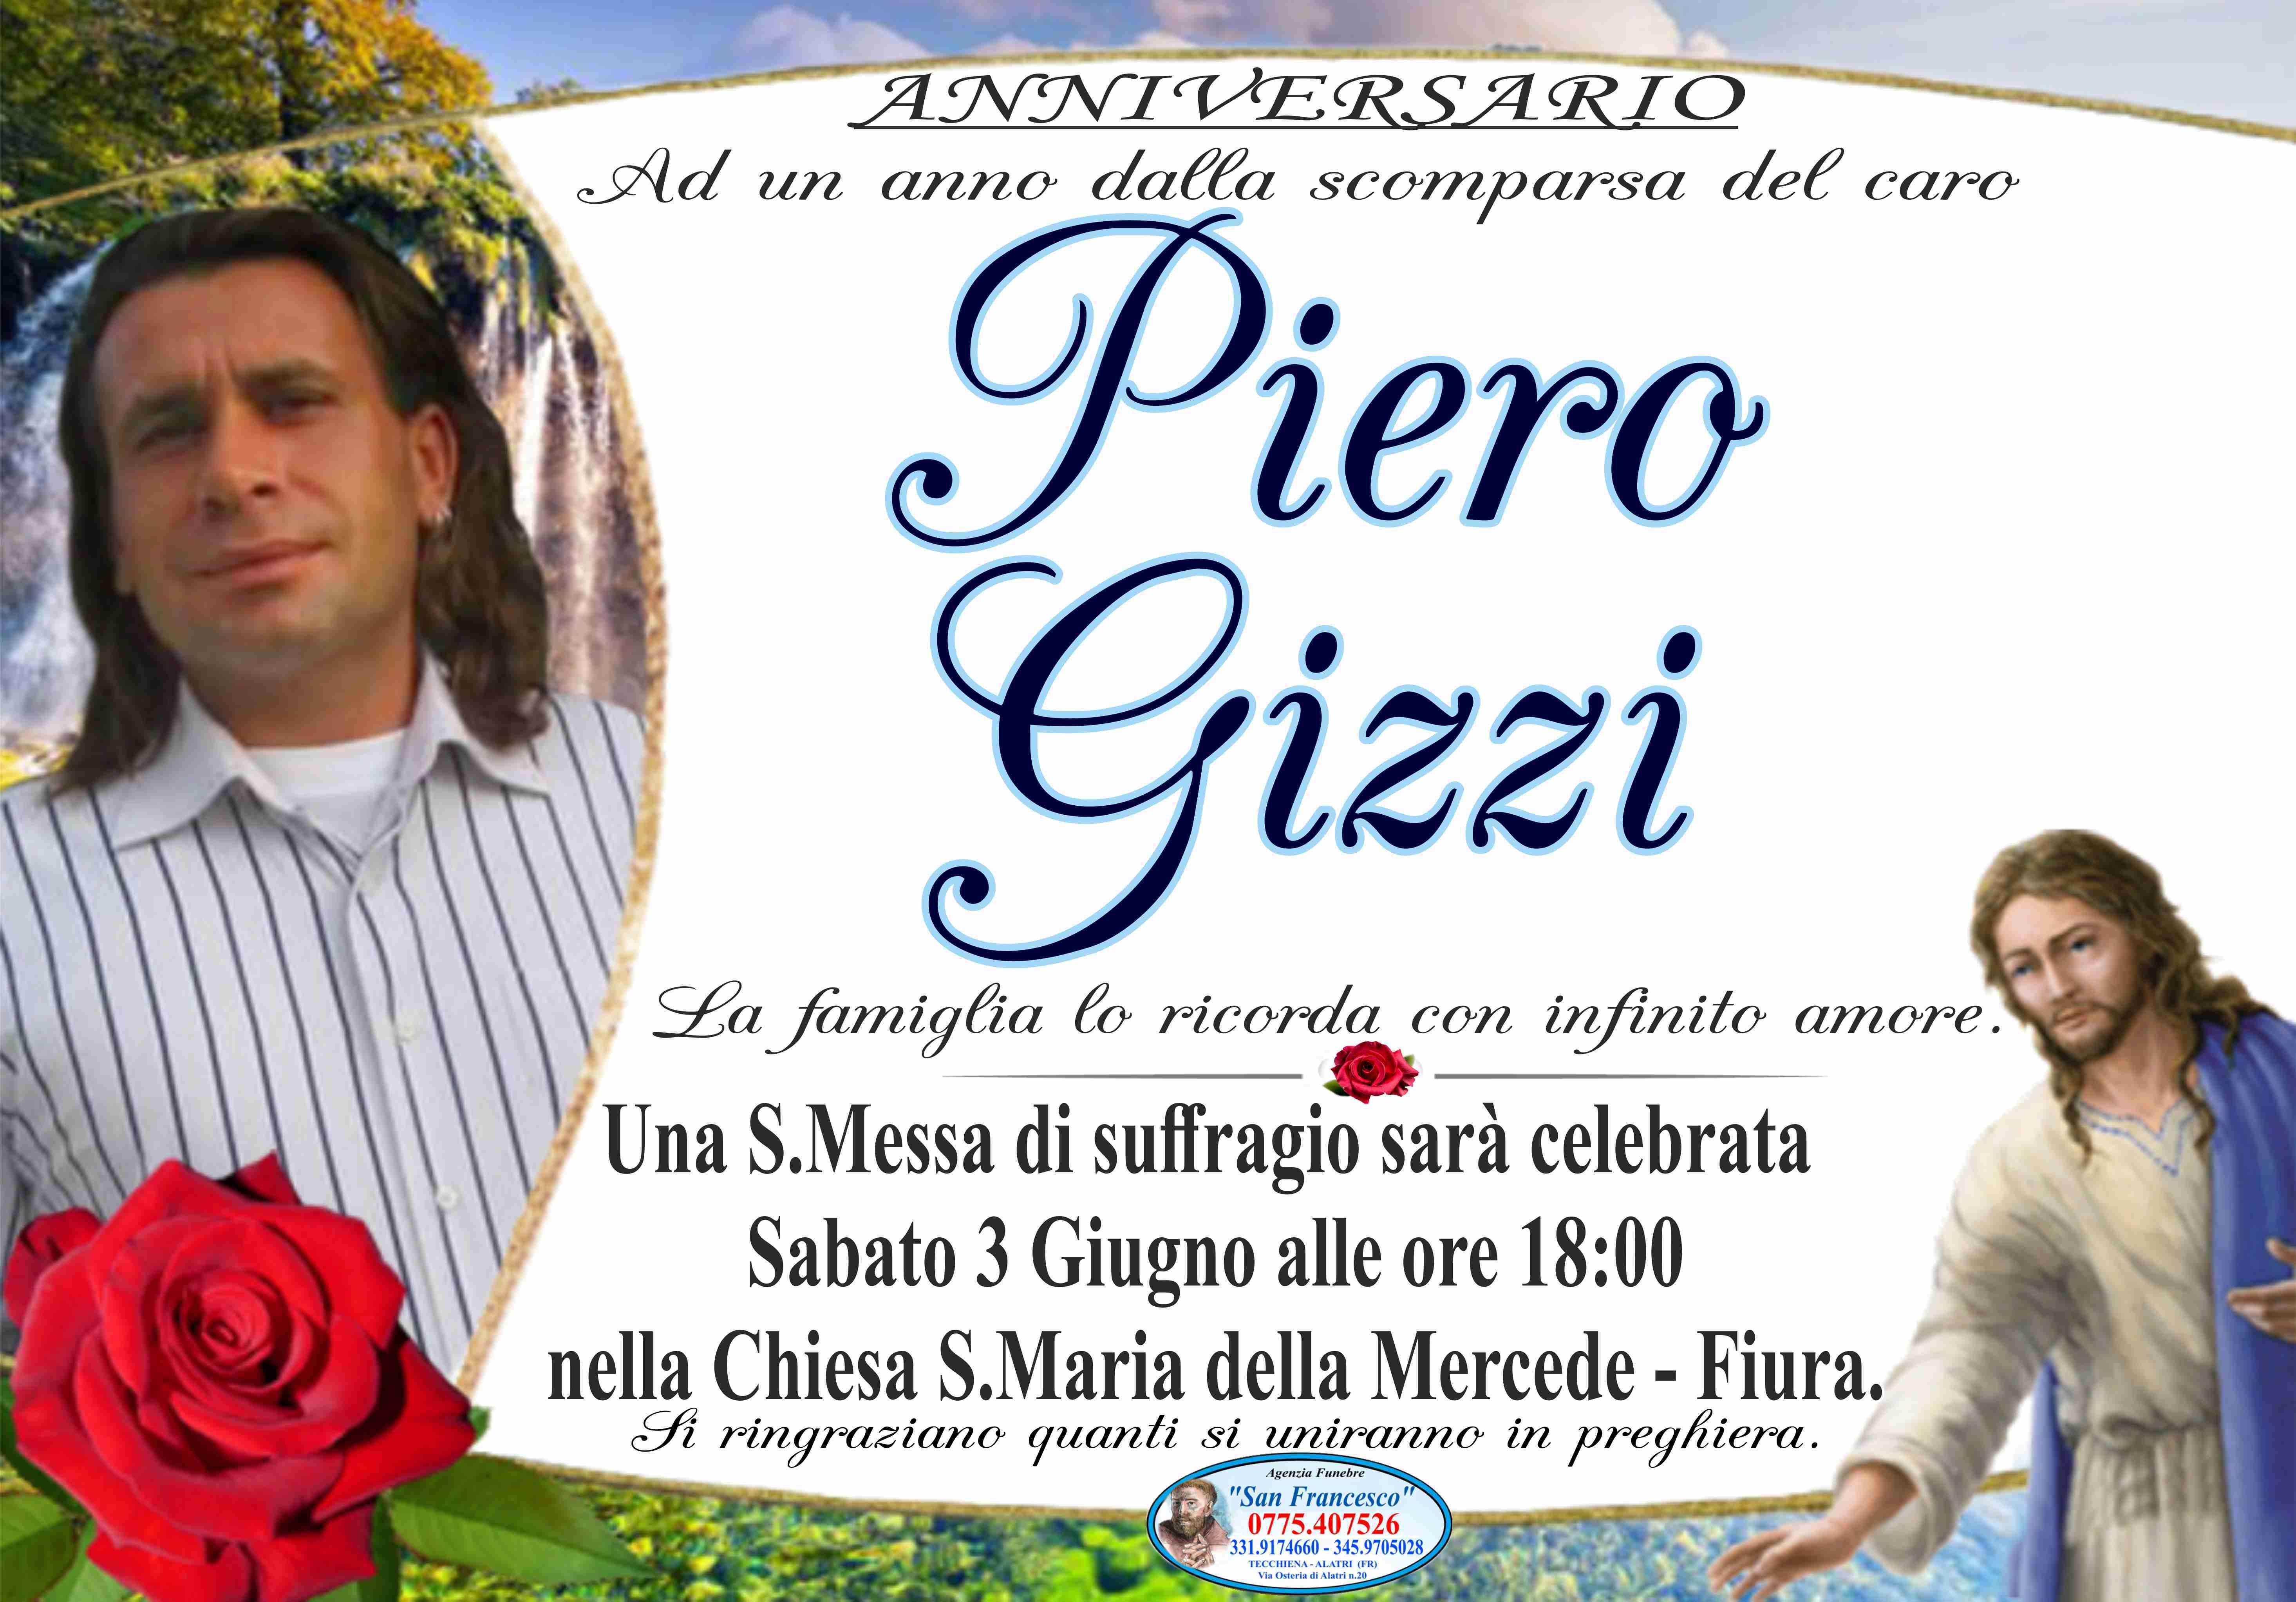 Piero Gizzi